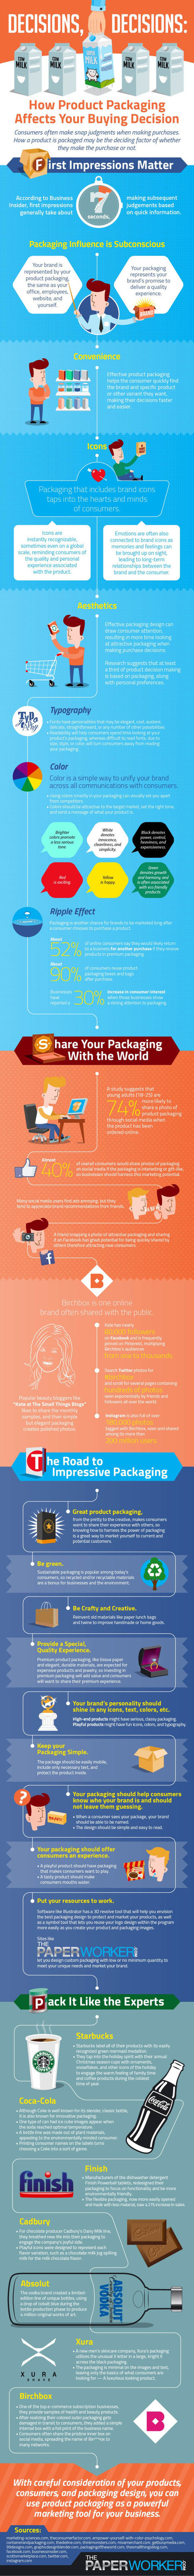 El envase afecta a la decisión de compra #infografia #infographic #marketing | Seo, Social Media Marketing | Scoop.it